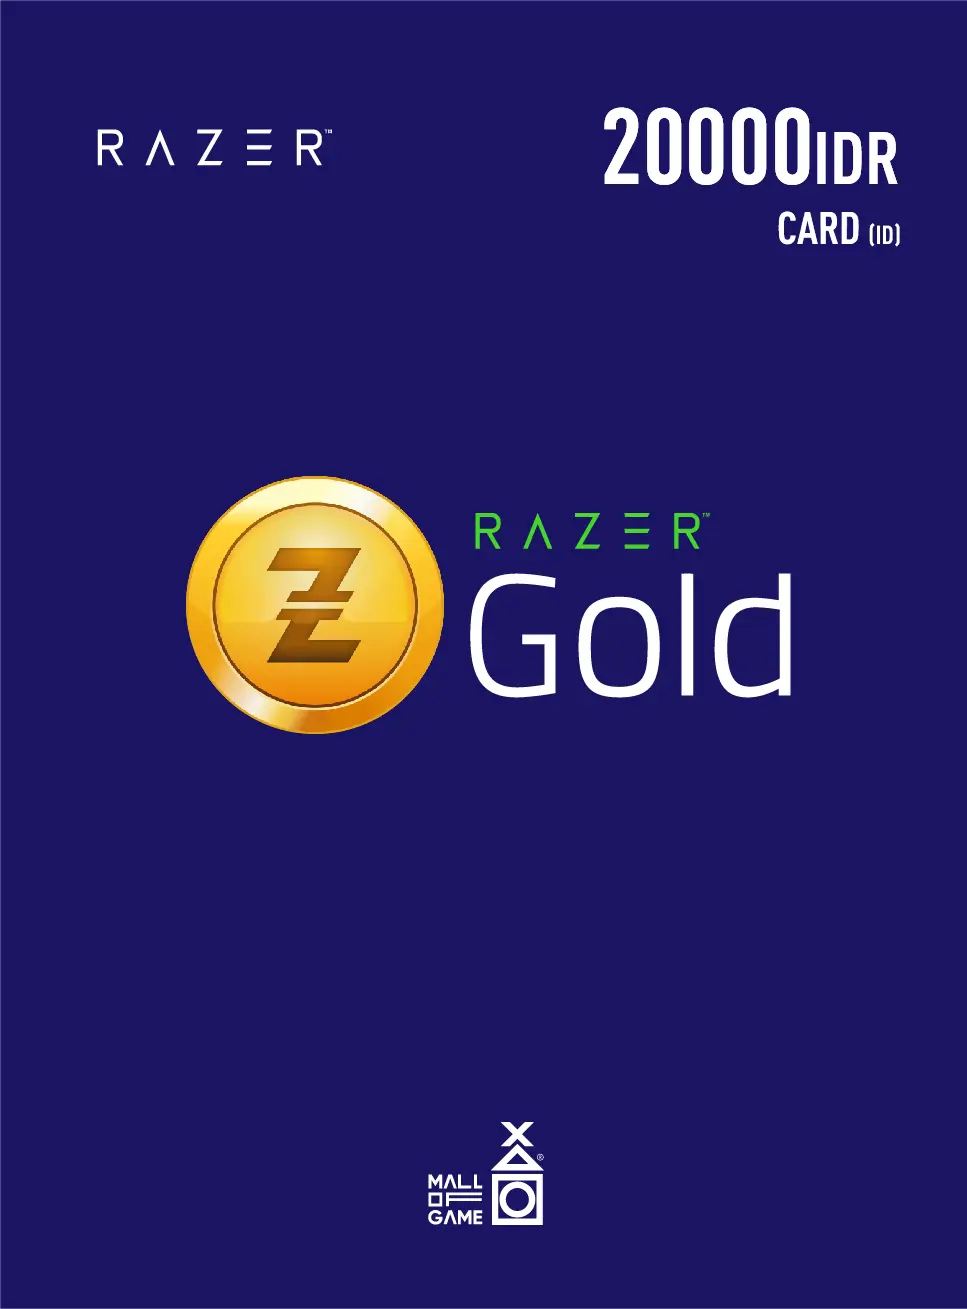 Razer Gold IDR20,000 (ID)